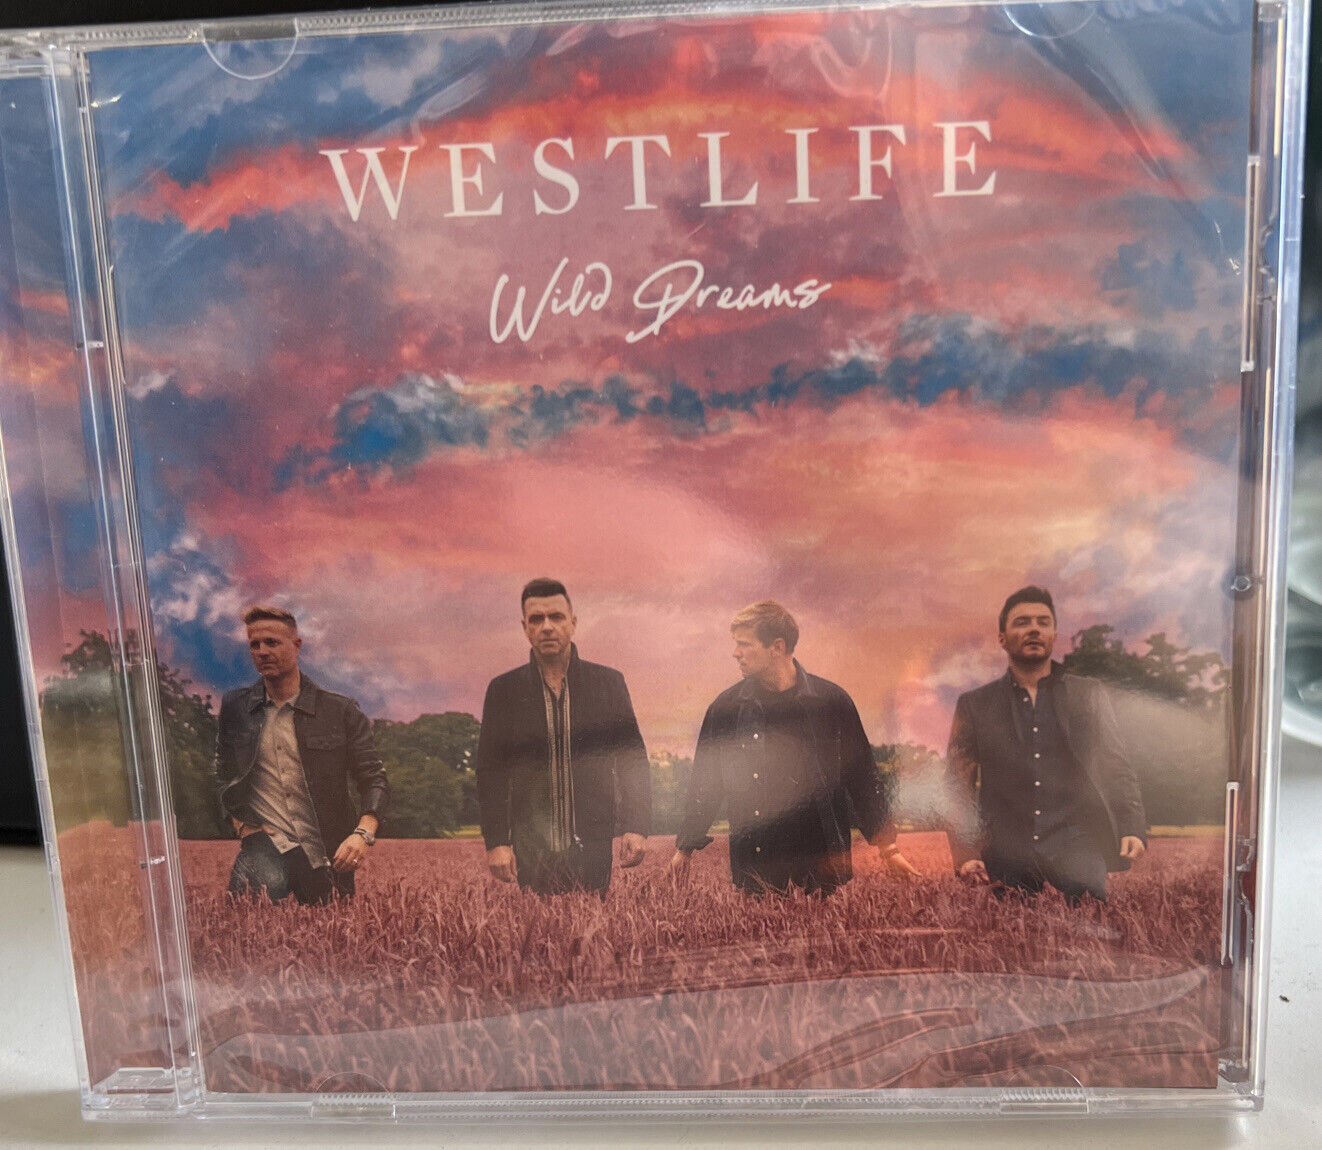 WESTLIFE - WILD DREAMS (CD ALBUM) NEW SEALED Free Post U.K.